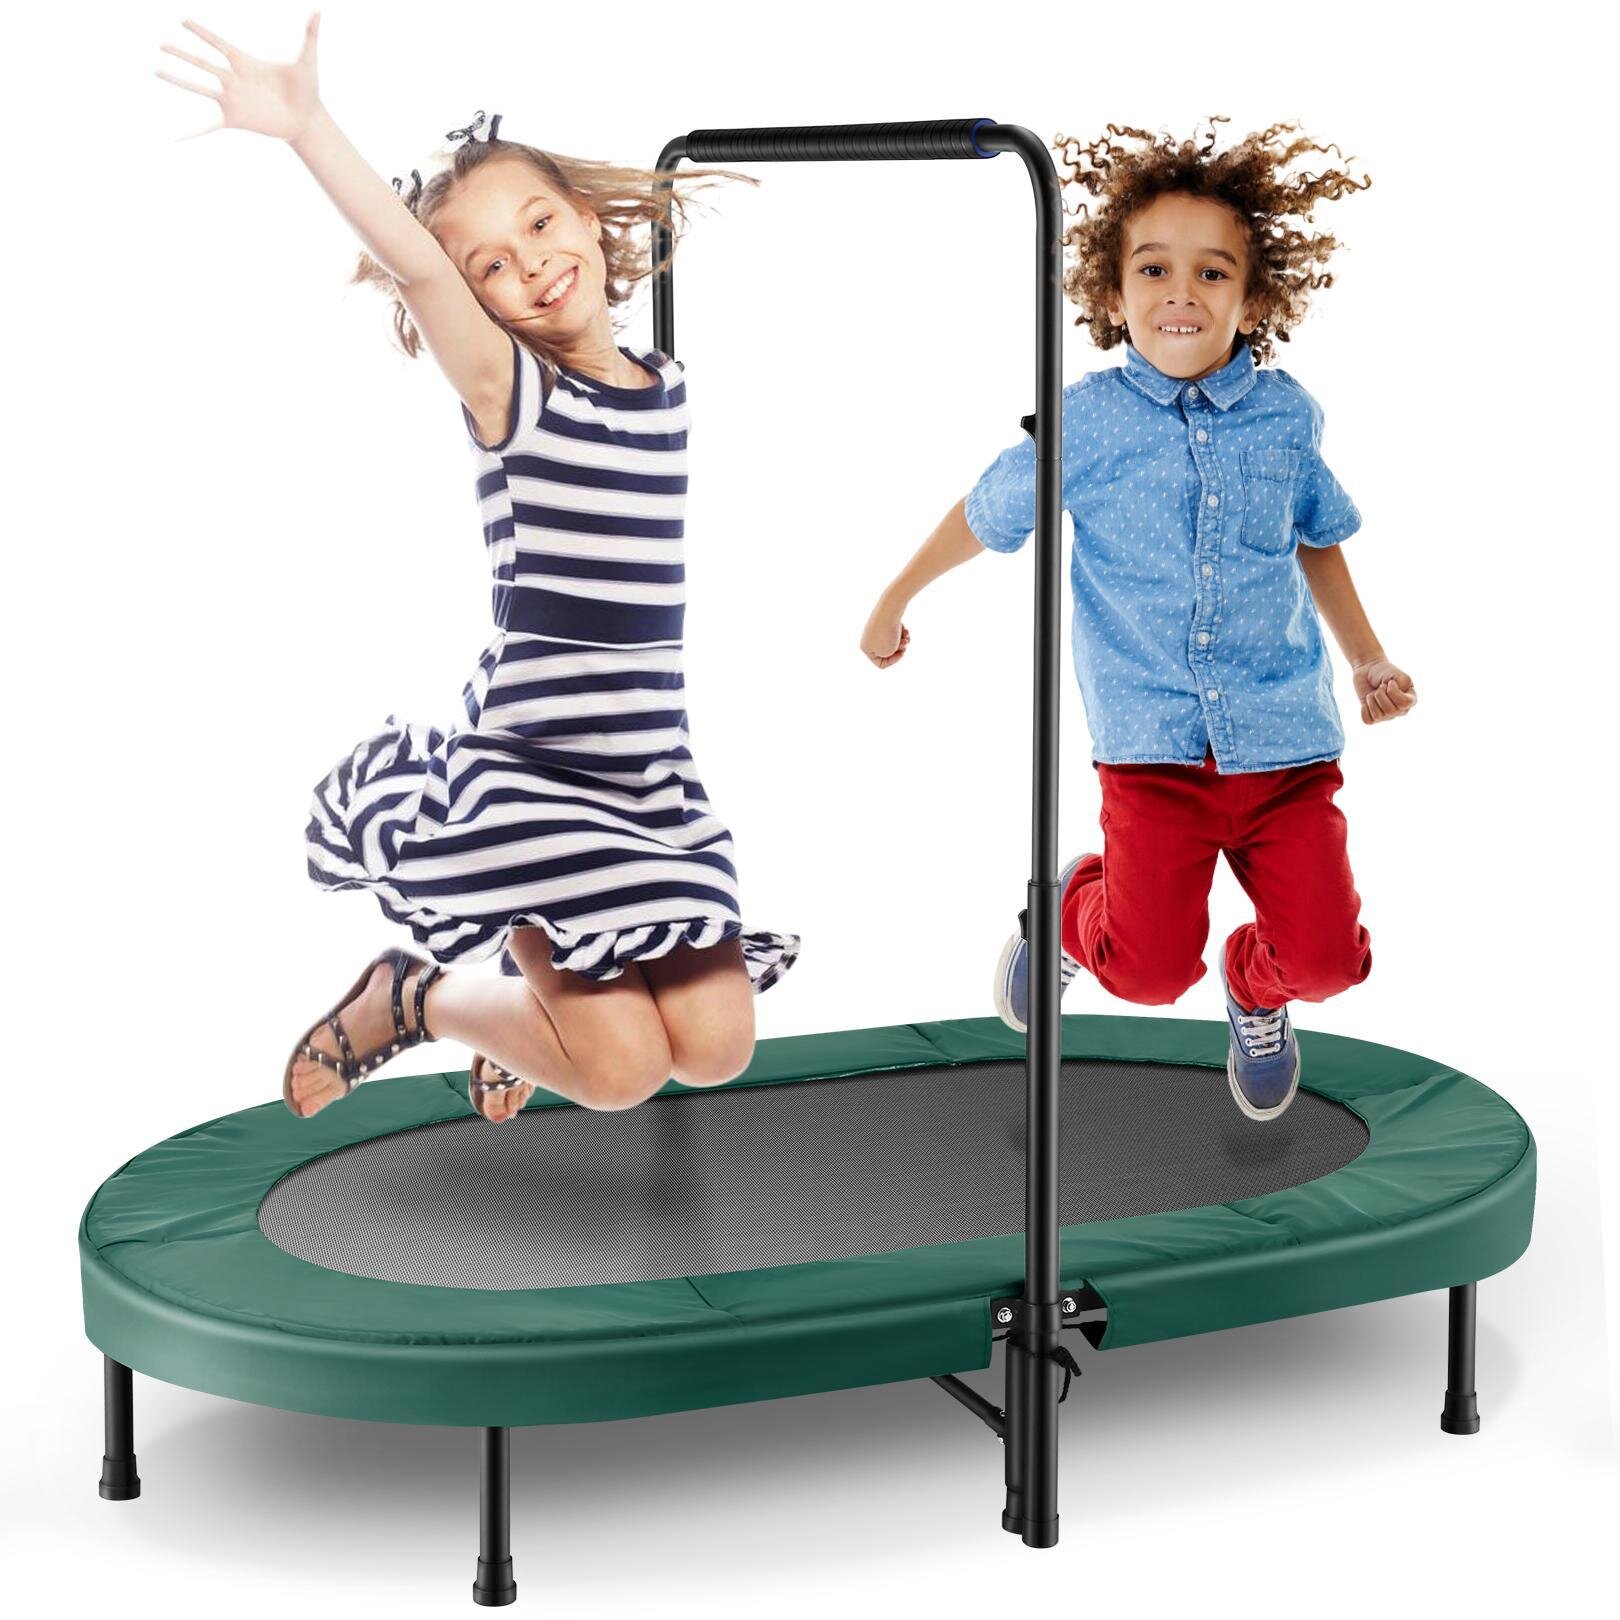 ANCHEER Fitness Trampolin Kinder Jumping Trampoline Belastbarkeit 150 Kg c S 02 